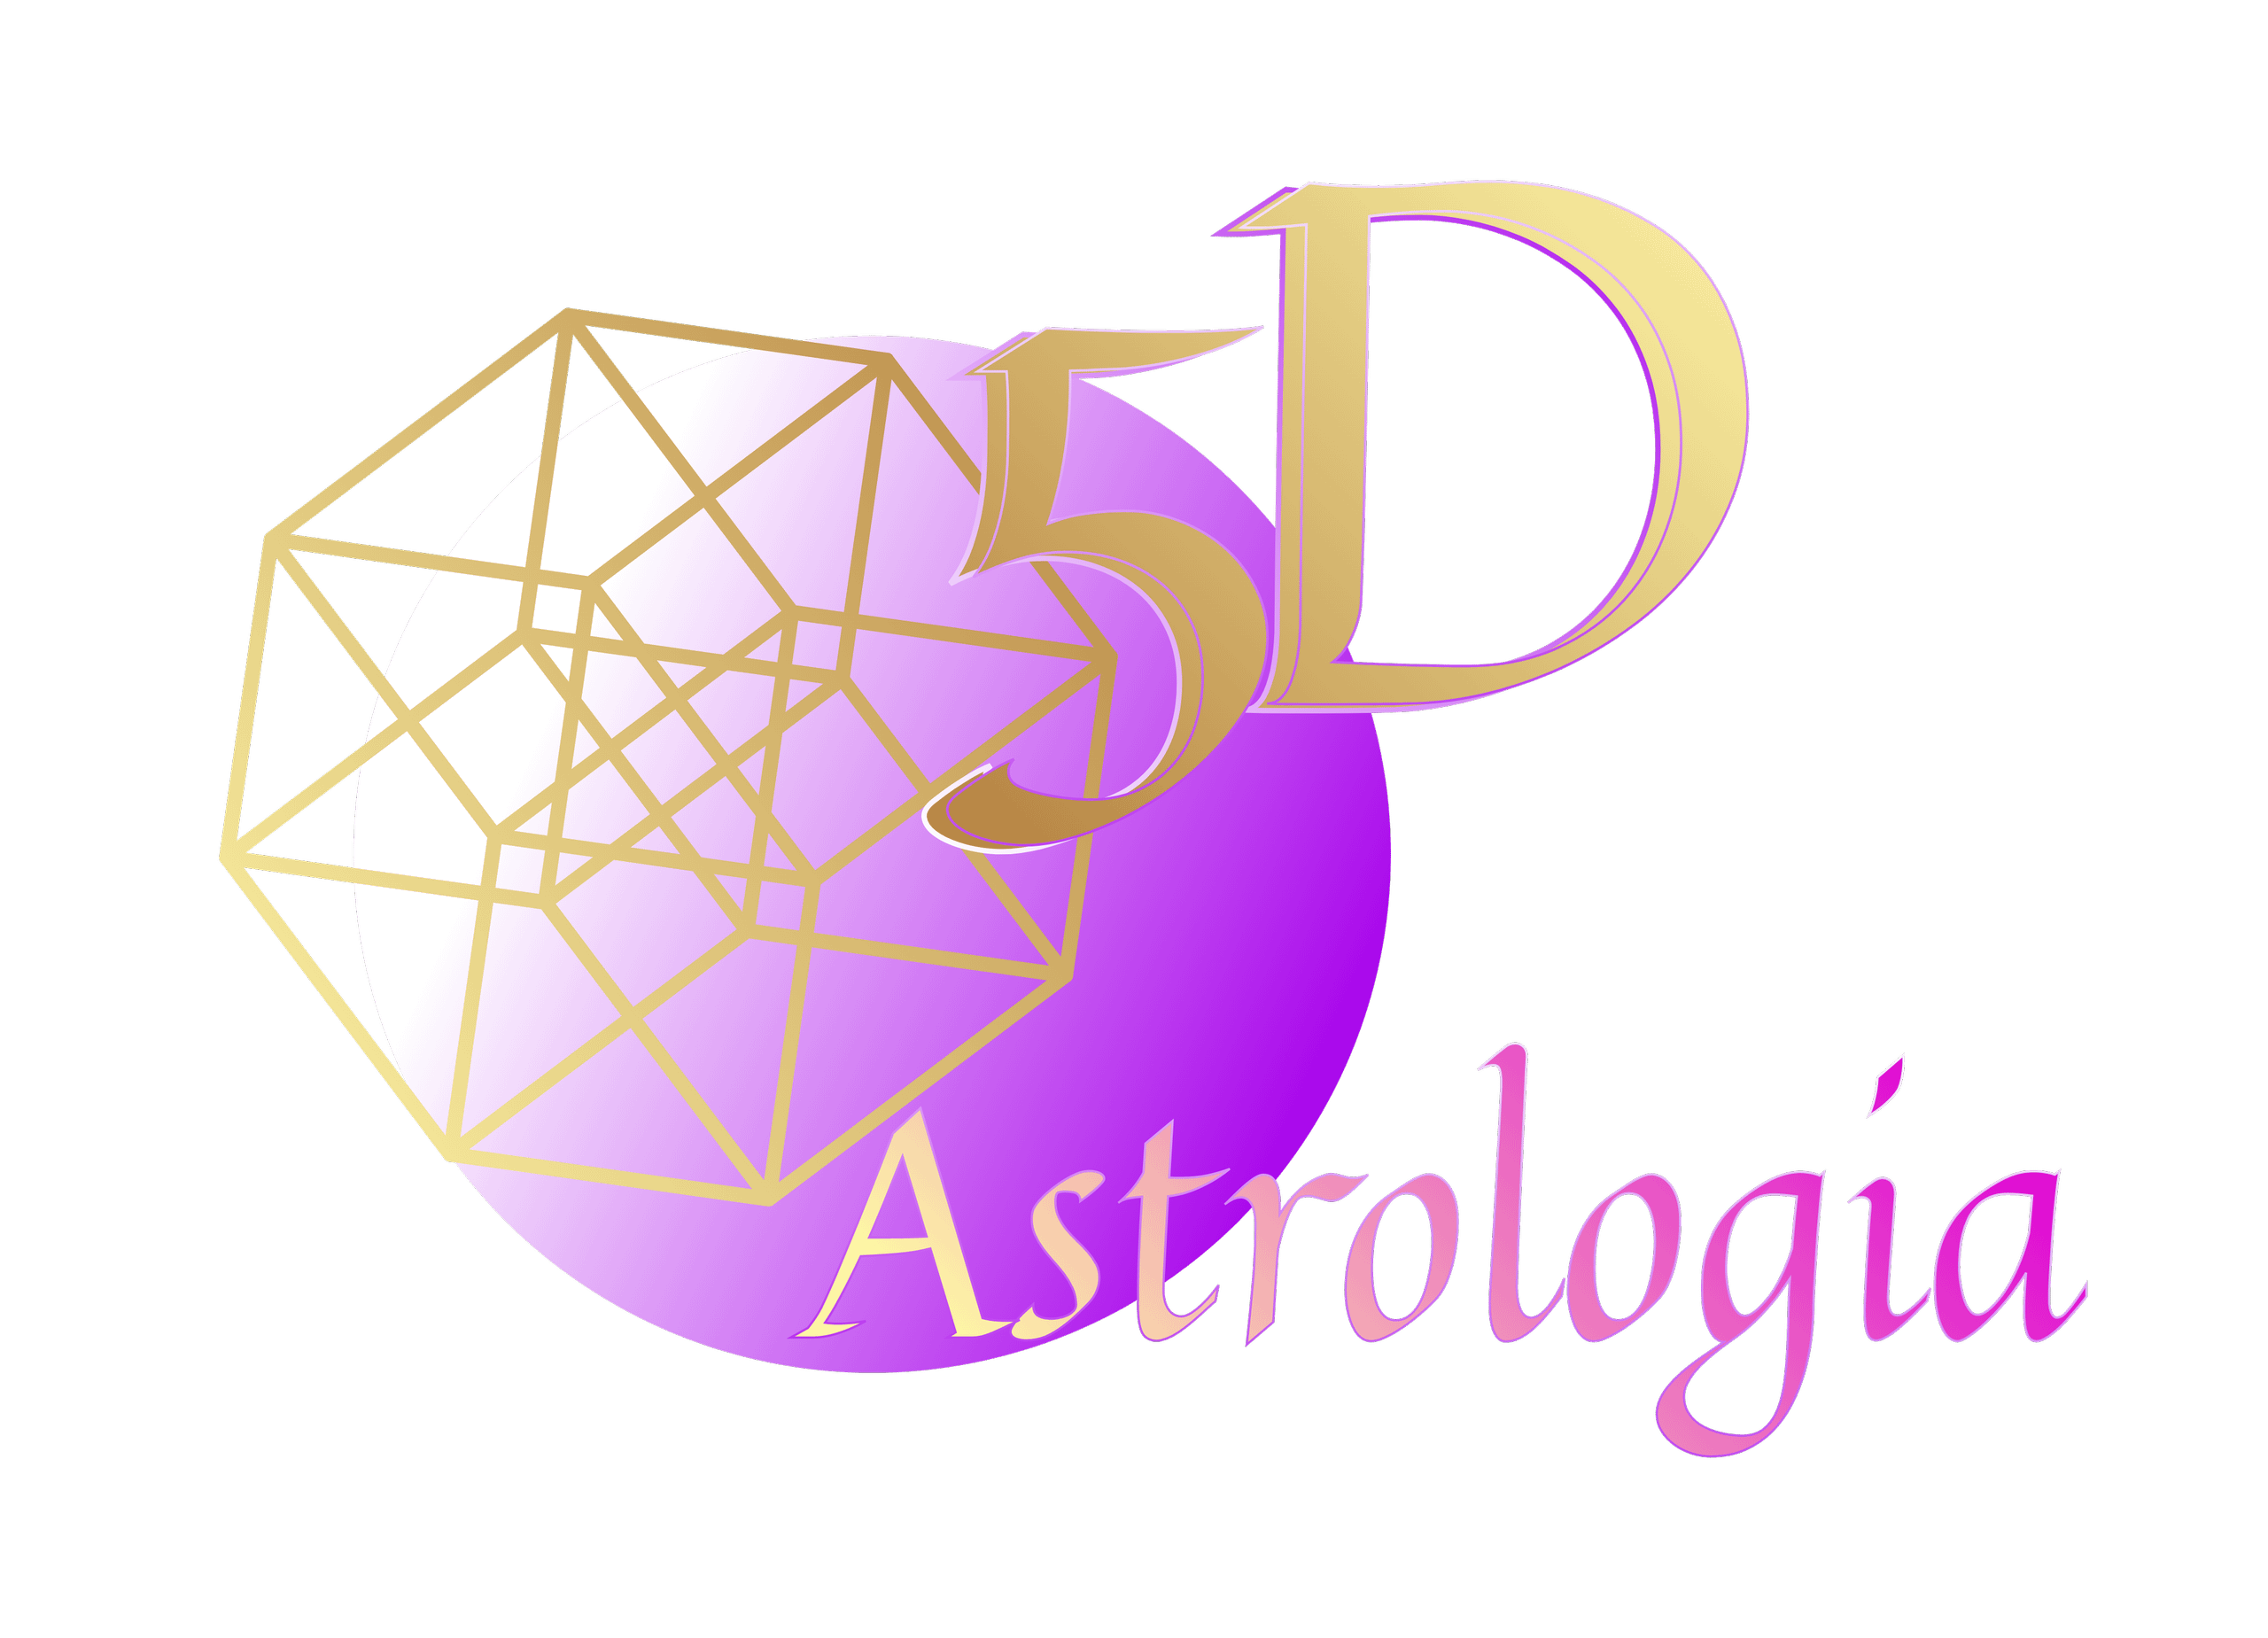 ASTROLOGIA 5D